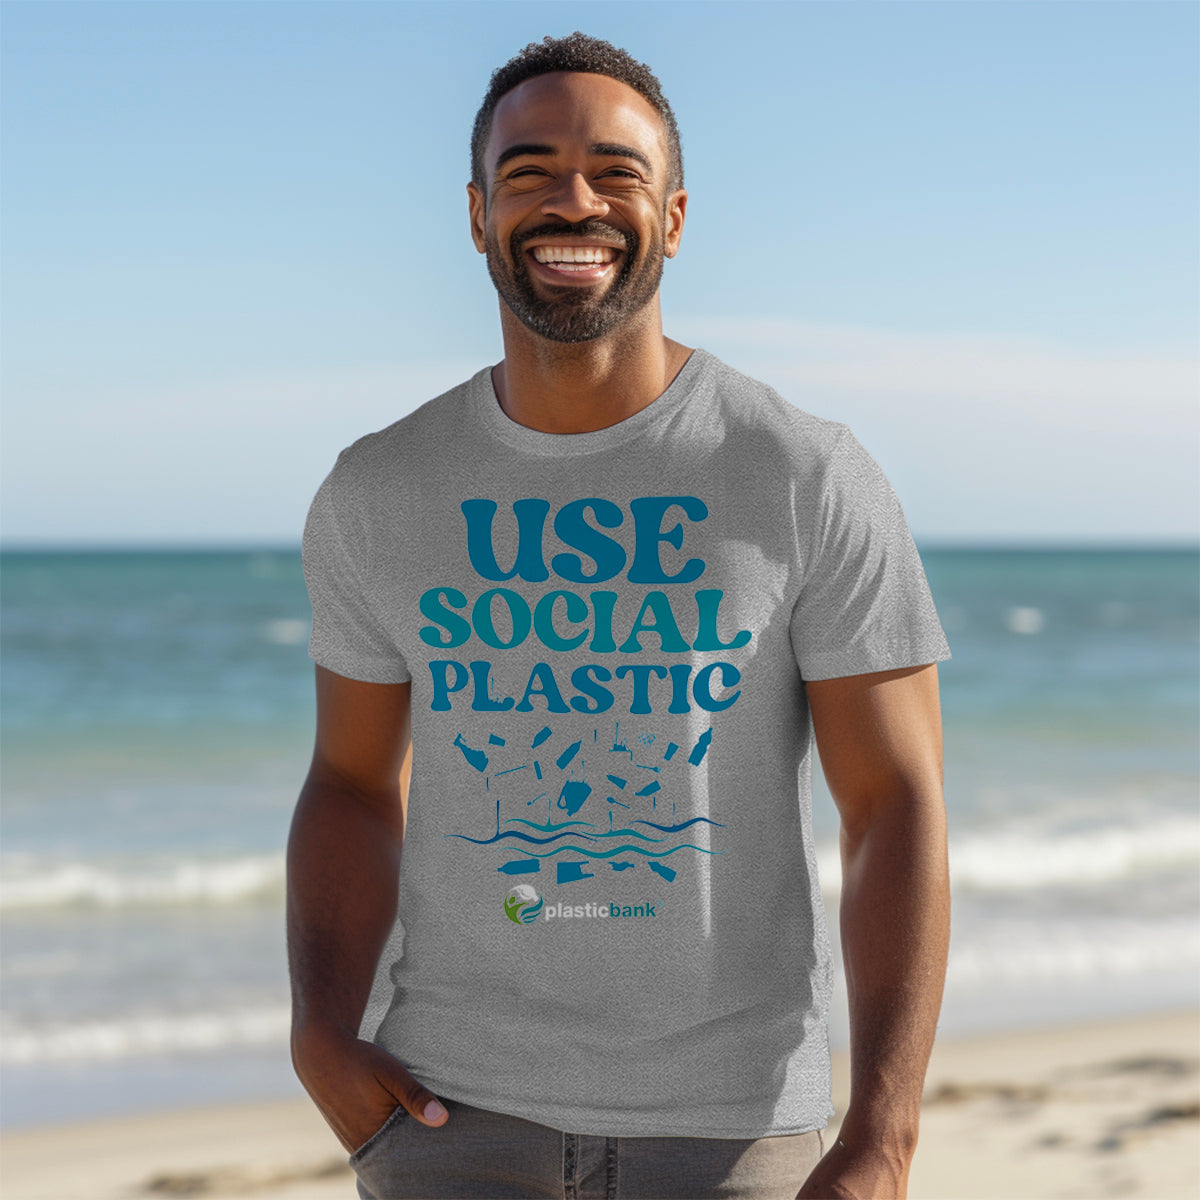 Use Social Plastic